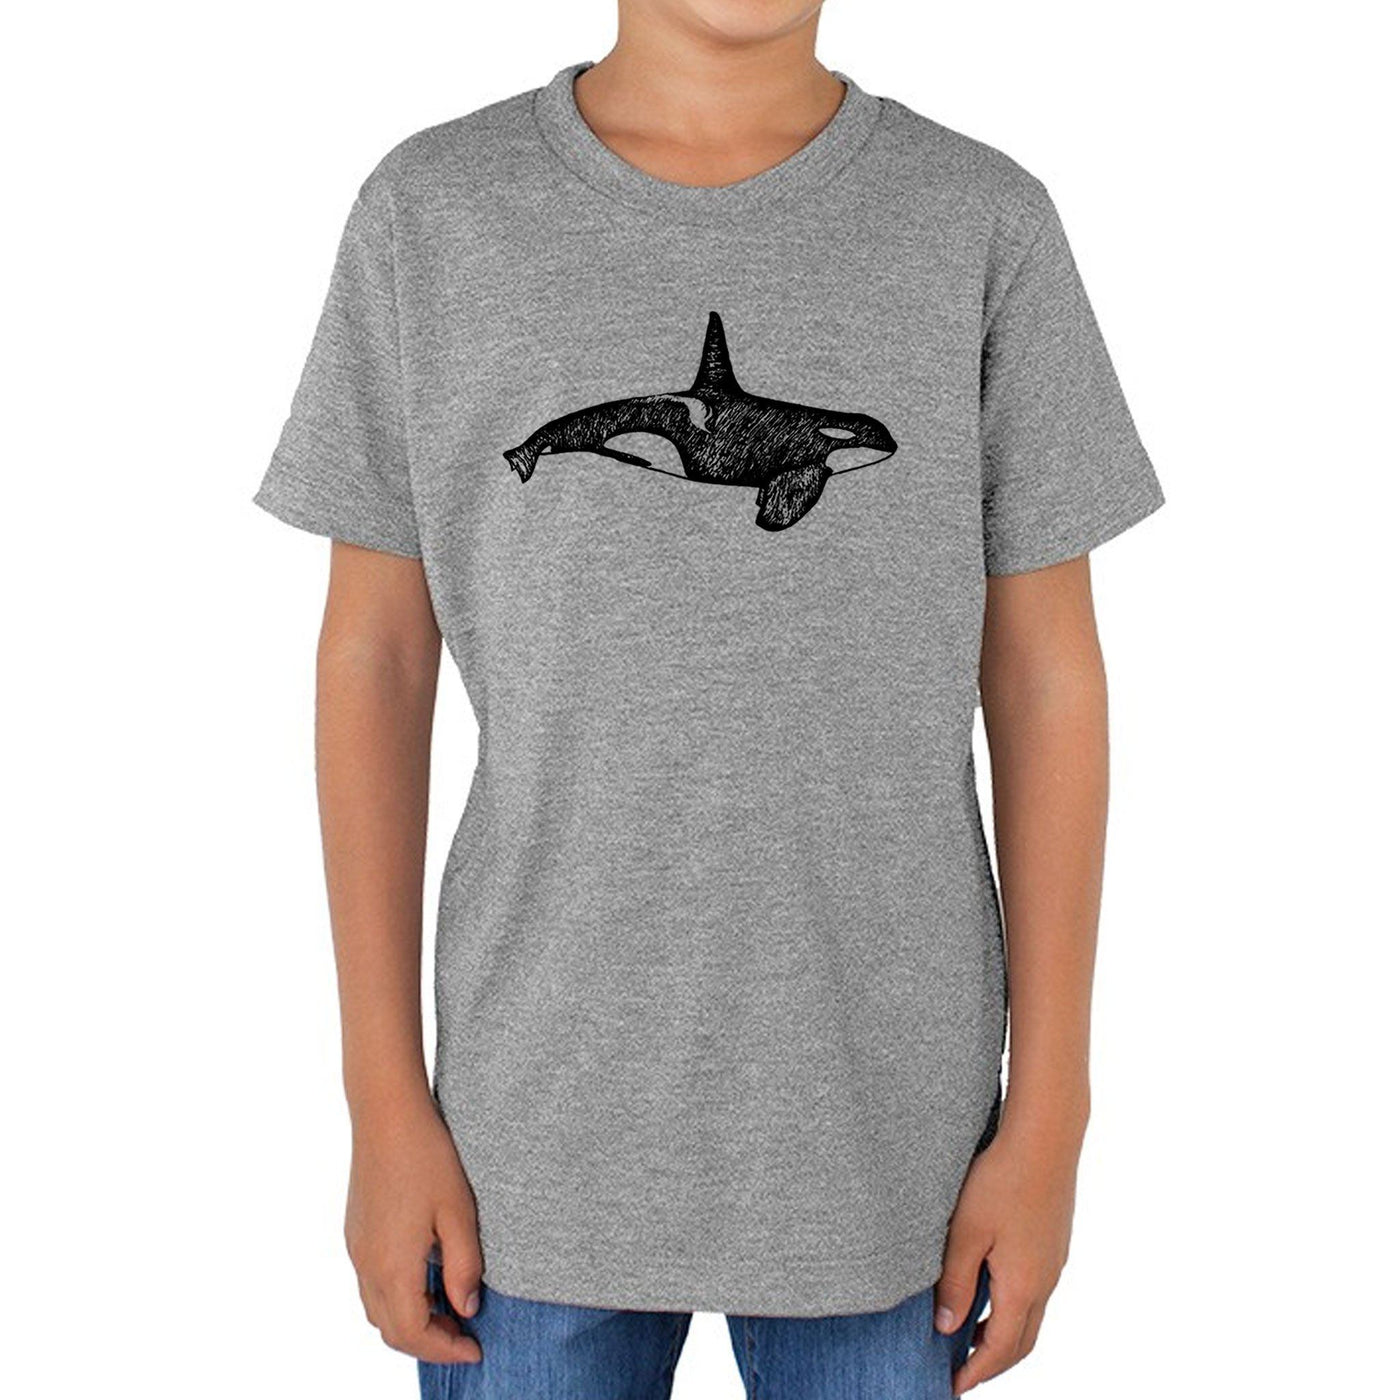 Orca - Kids triblend t-shirt (Grey) Shirt Printshop Northwest